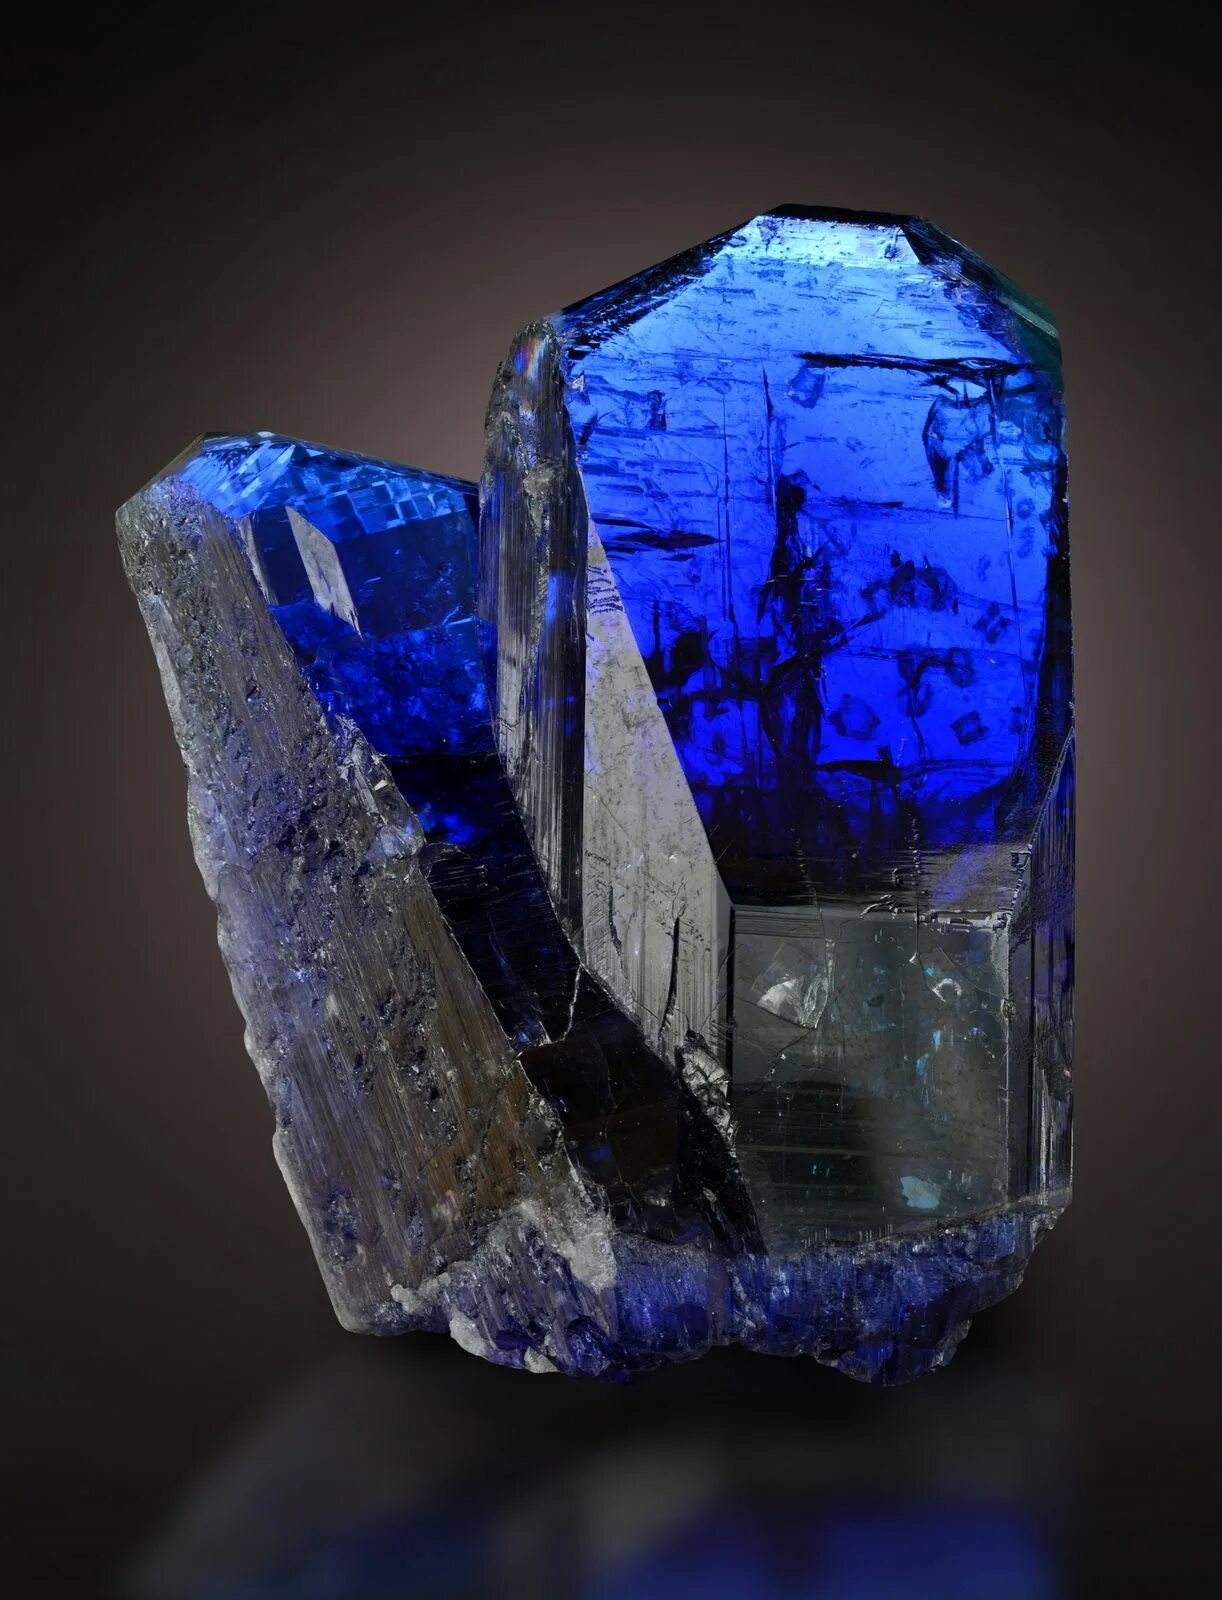 Кристалл кристальный. Танзанит камень Кристаллы. Минерал танзанит кварц.... Самоцветы камни танзанит. Танзанит («голубой Алмаз»).